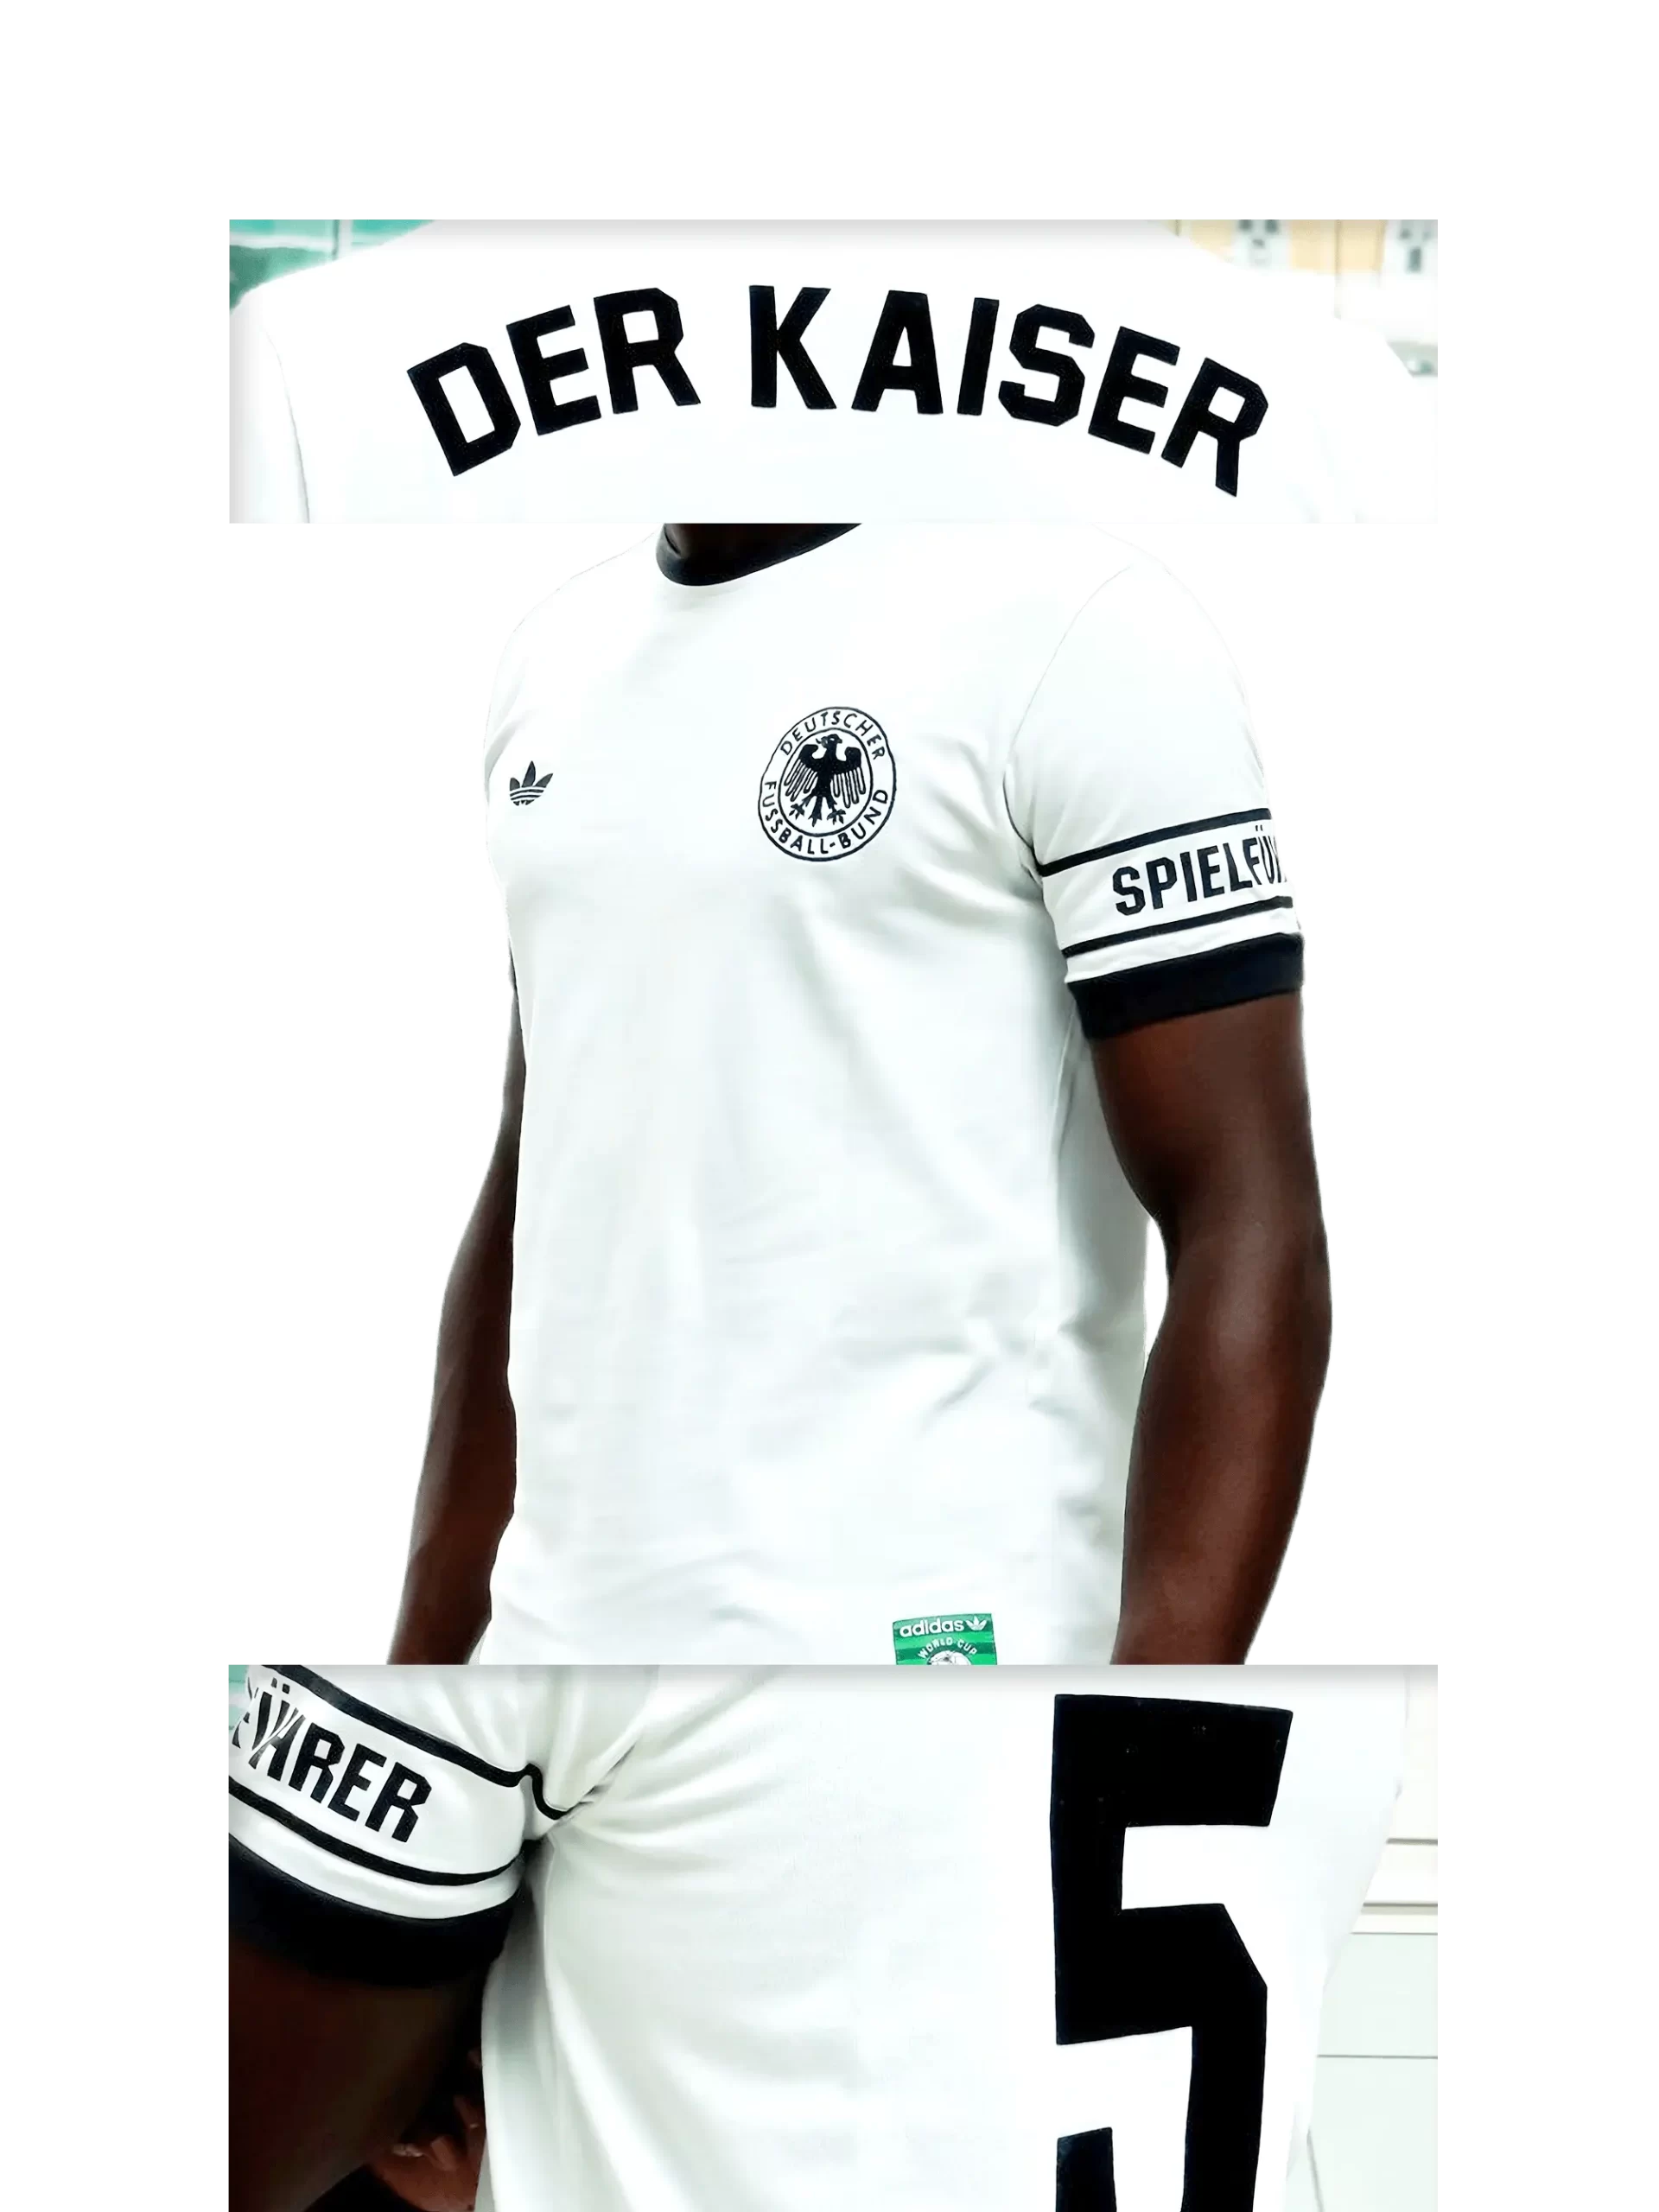 Men's 2006 Der Kaiser '74 T-shirt by Adidas Originals: Effective (EnLawded.com file #lmchk57408ip2y123319kg9st)